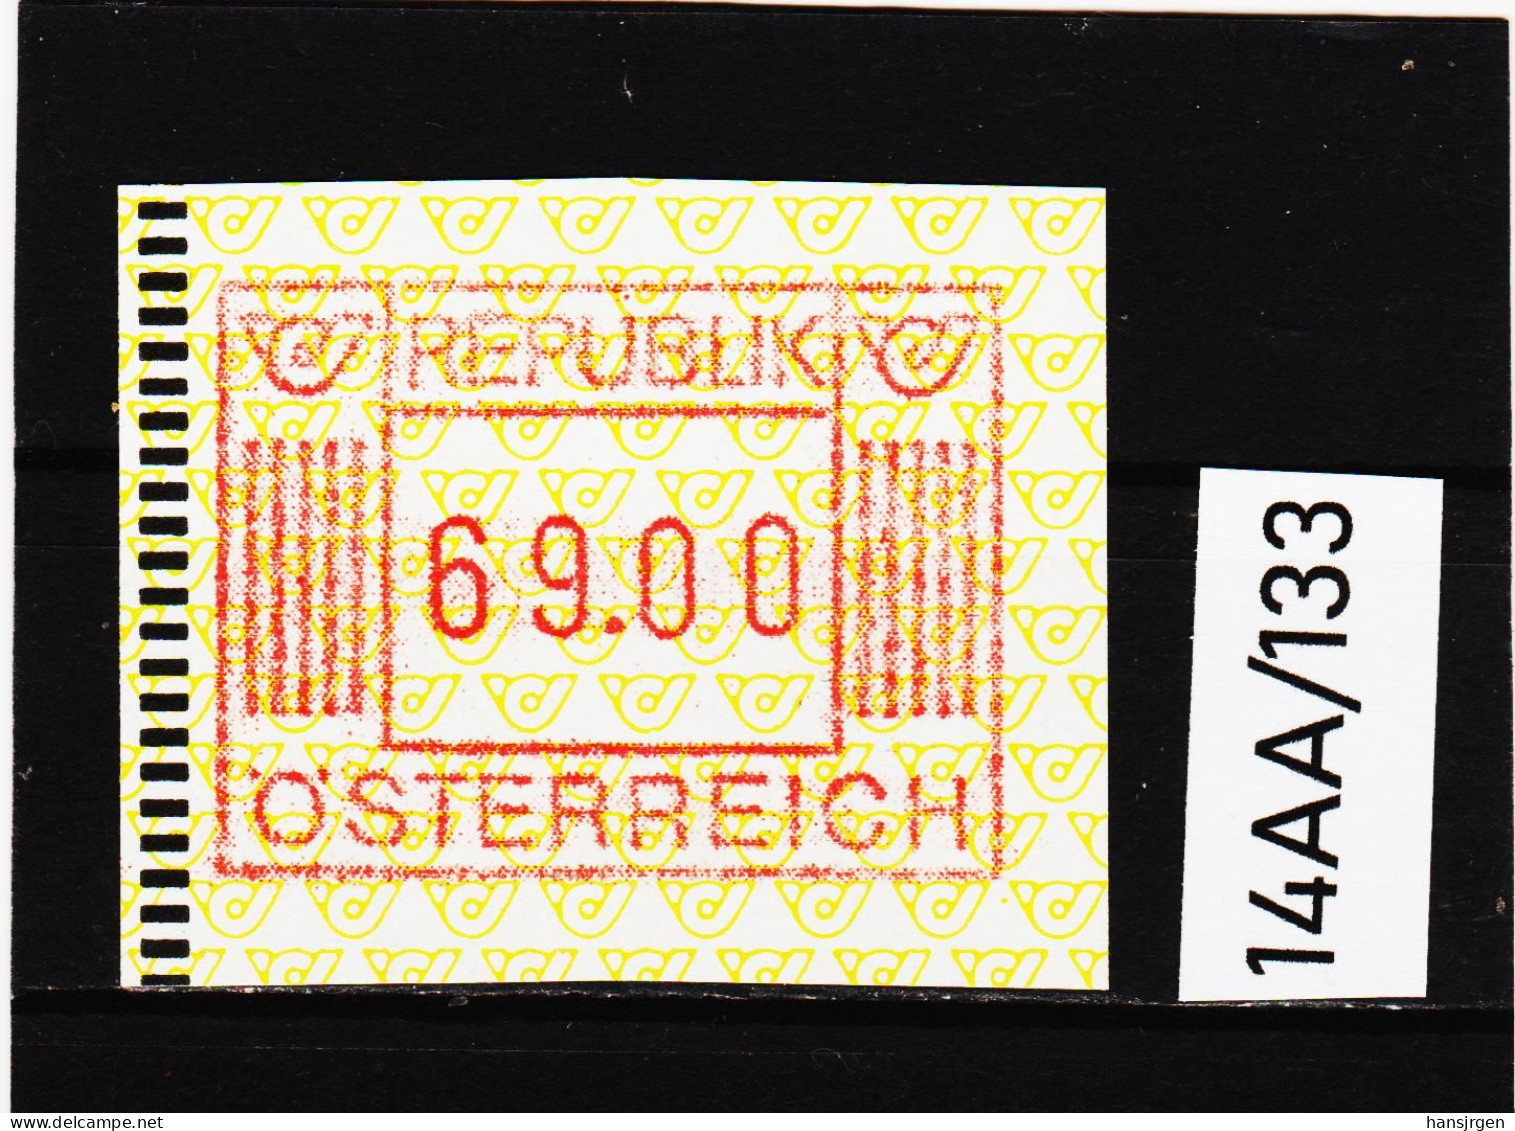 14AA/133  ÖSTERREICH 1983 AUTOMATENMARKEN  A N K  1. AUSGABE  69,00 SCHILLING   ** Postfrisch - Timbres De Distributeurs [ATM]